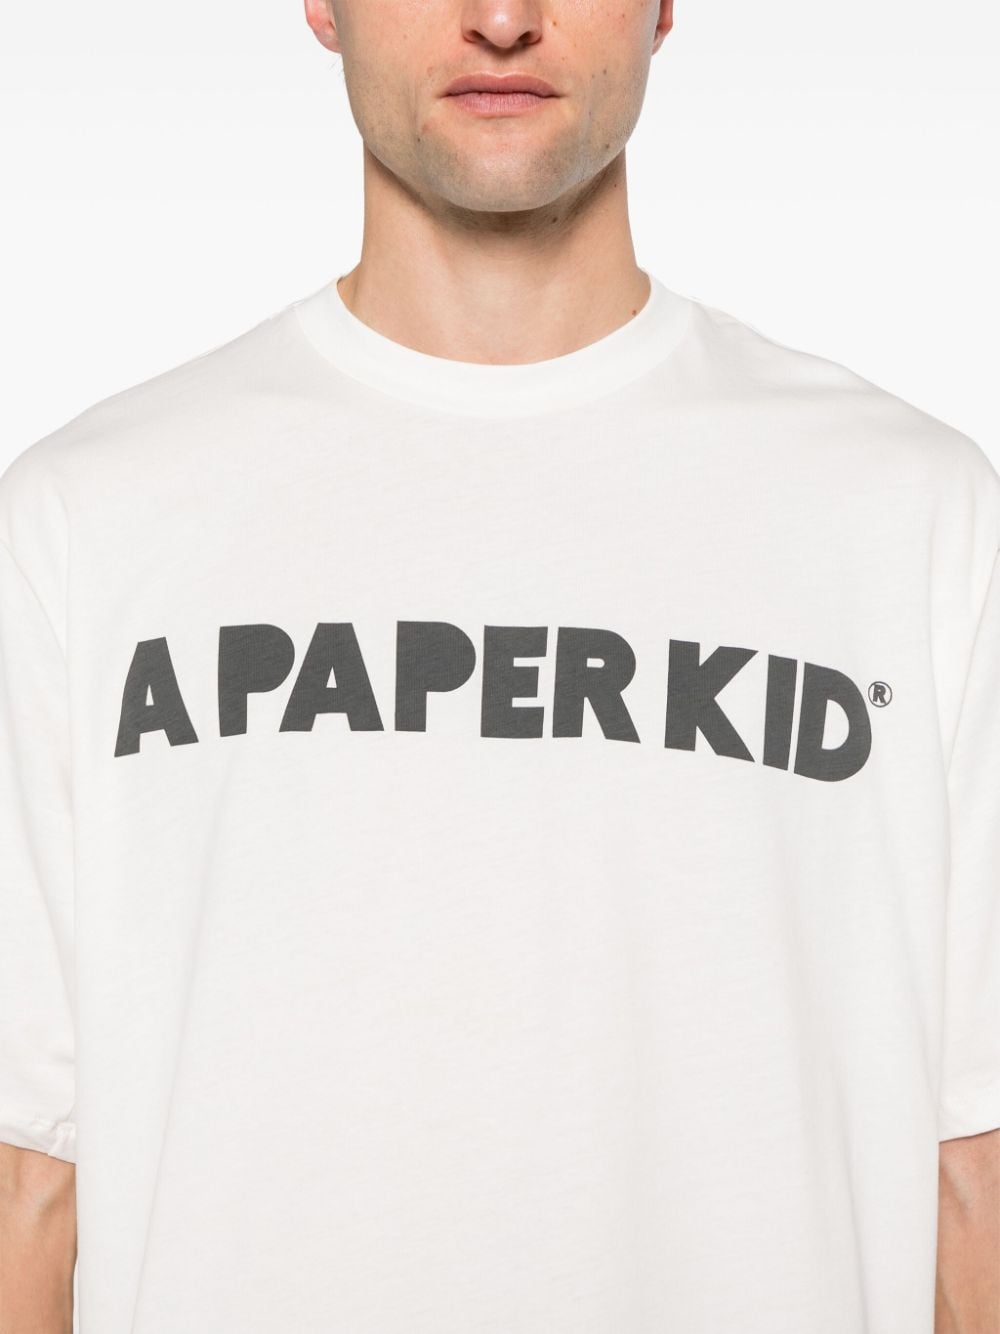 A Paper Kid A PAPER KID- Logo T-shirt